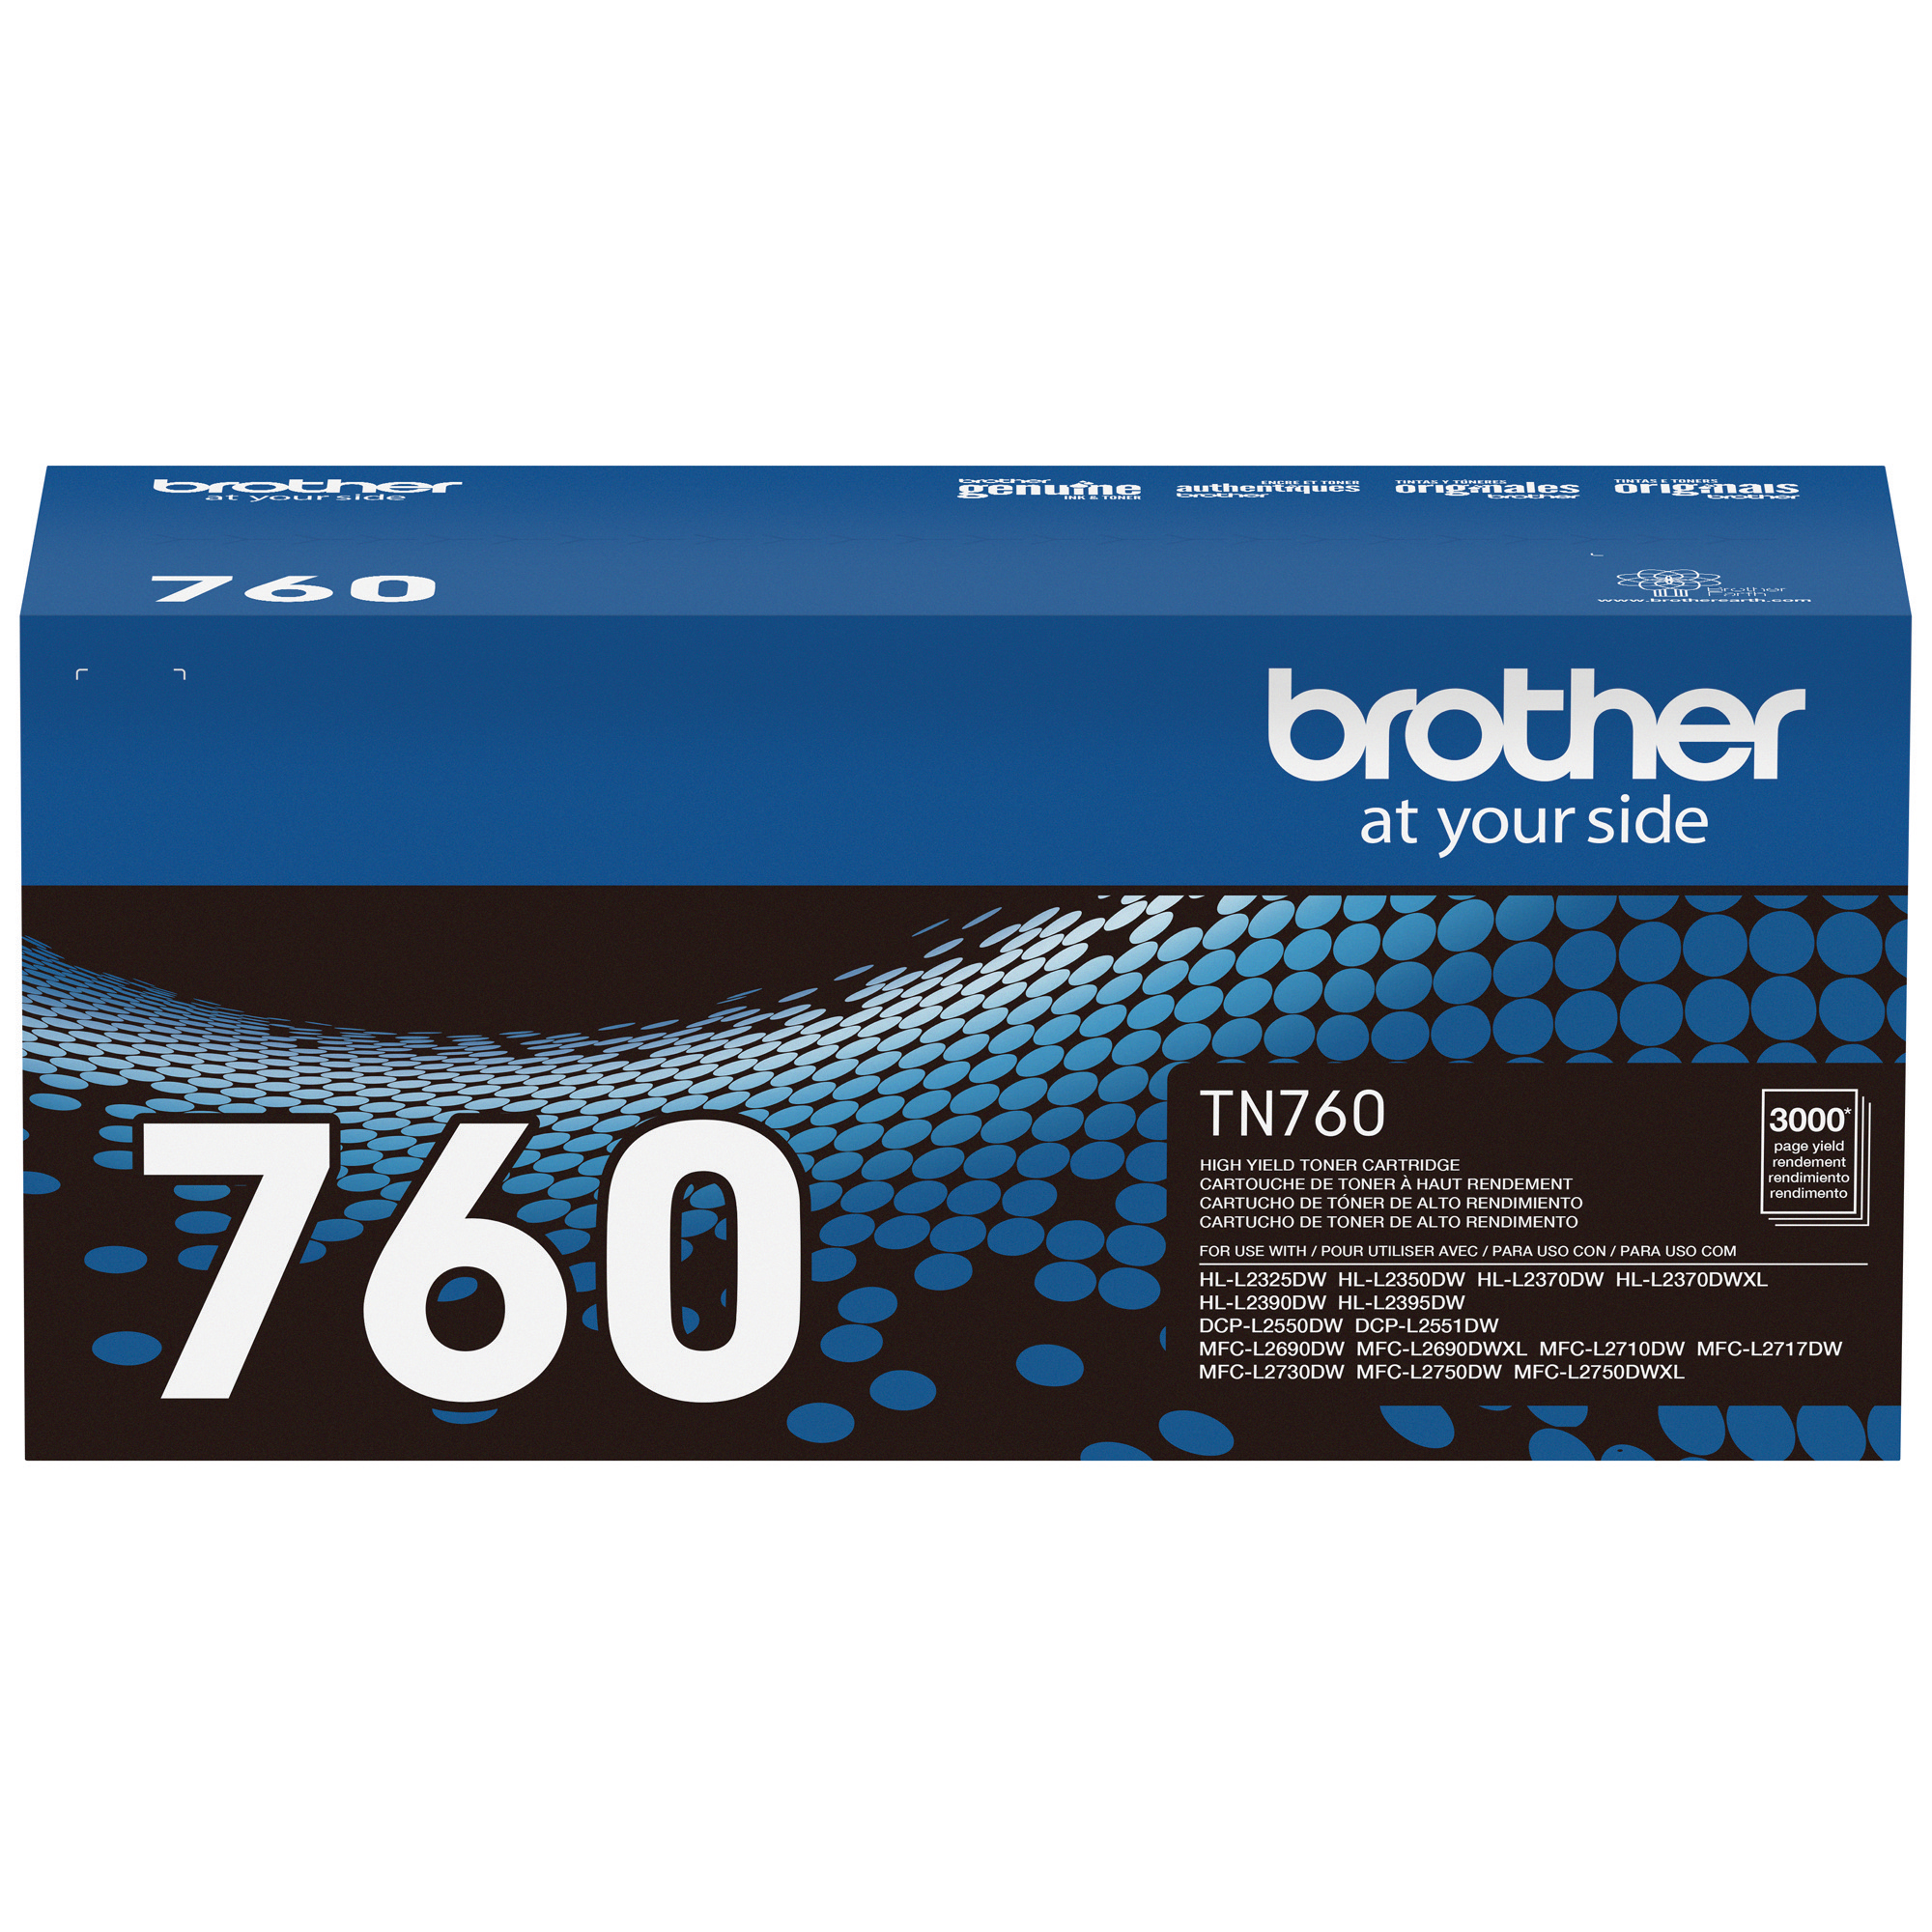 Brother Genuine TN760 High‐Yield Black Printer Toner Cartridge - image 1 of 6